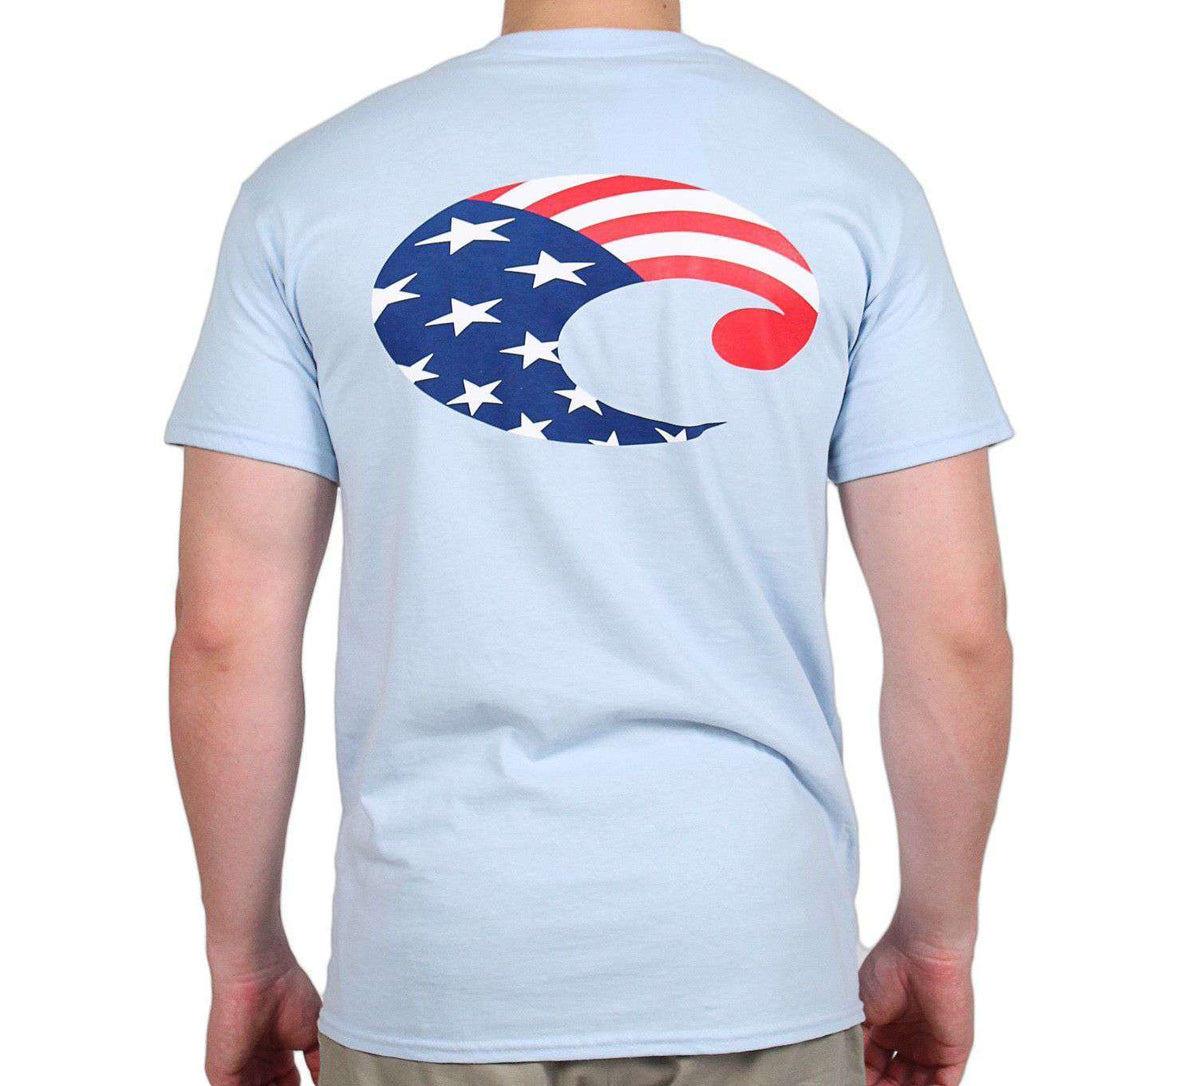 USA Flag Logo Tee Shirt in Light Blue by Costa Del Mar - Country Club Prep